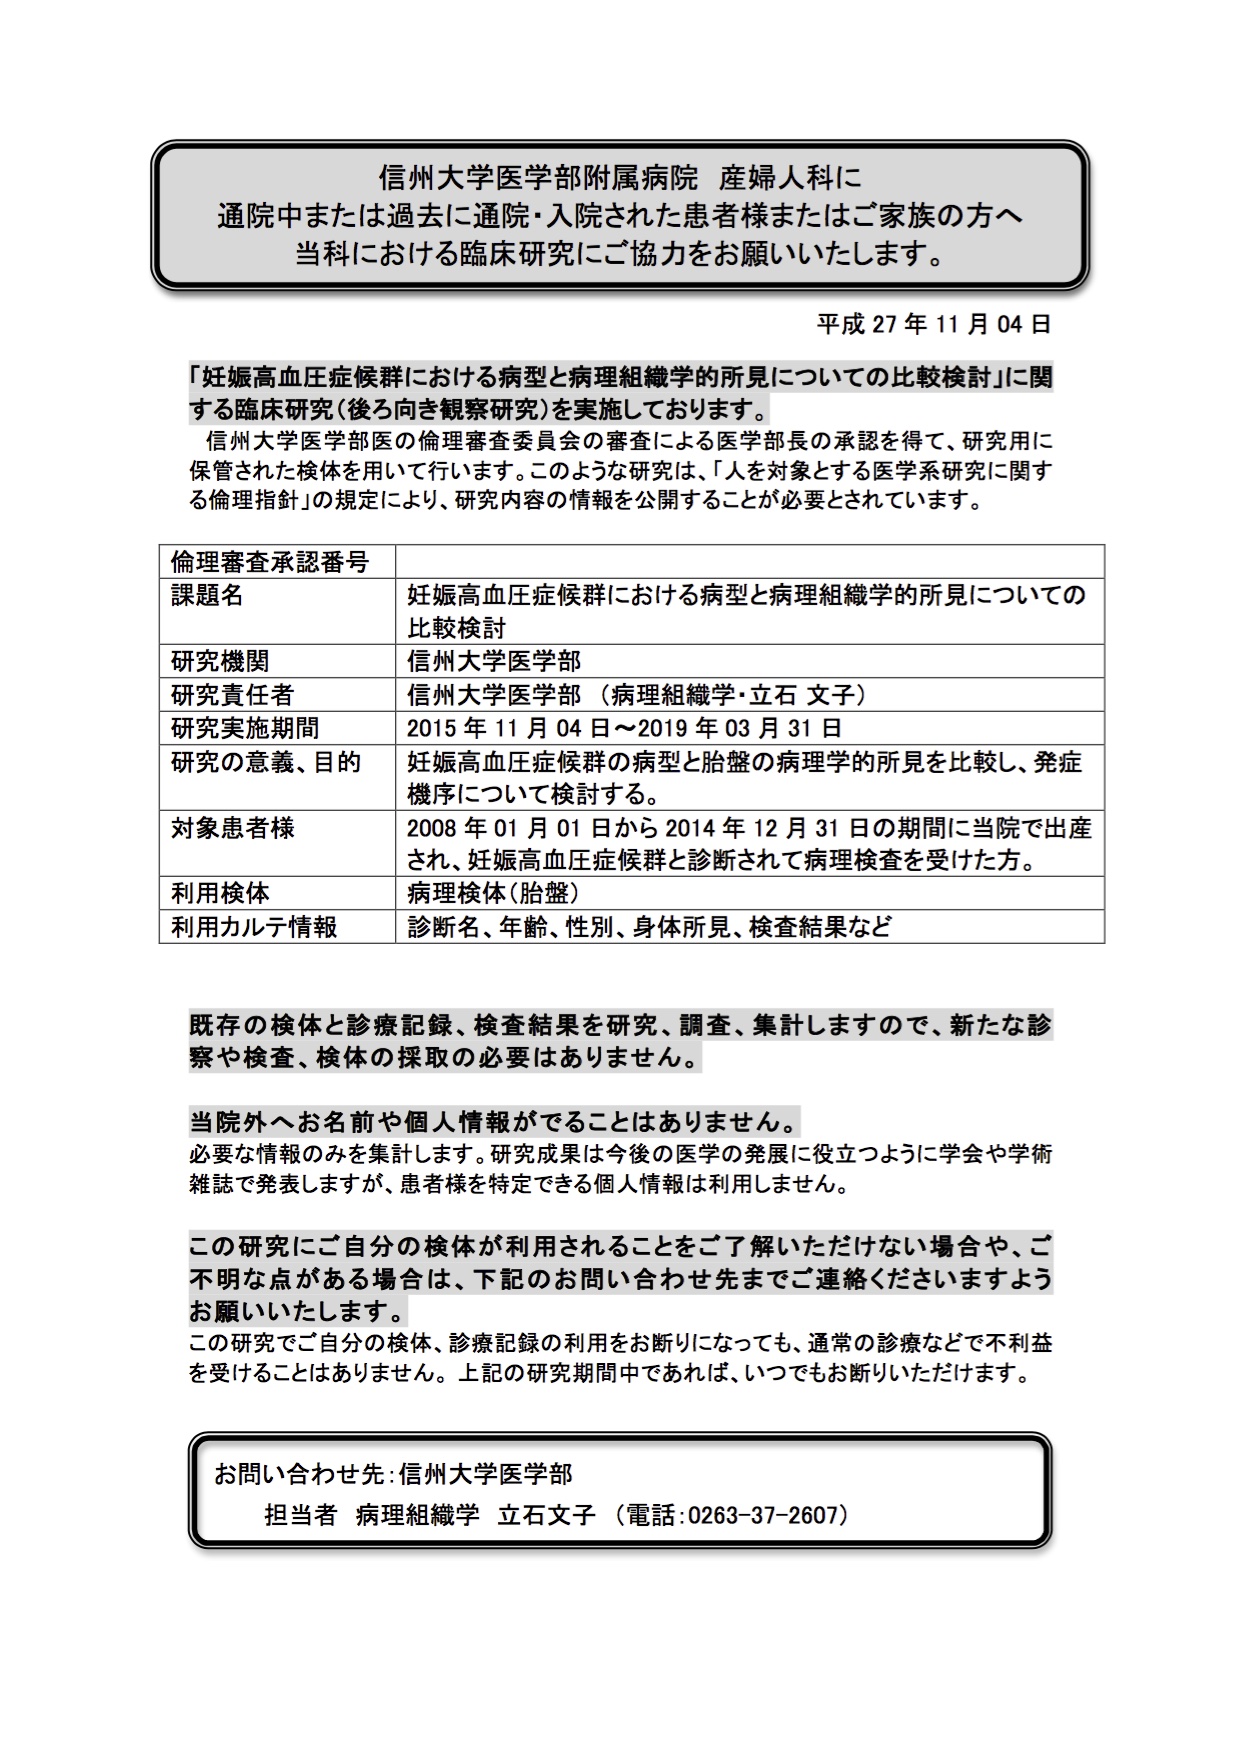 http://www.shinshu-u.ac.jp/faculty/medicine/chair/i-1byori/news/images/rinsho-tateishi%2020151126.jpg